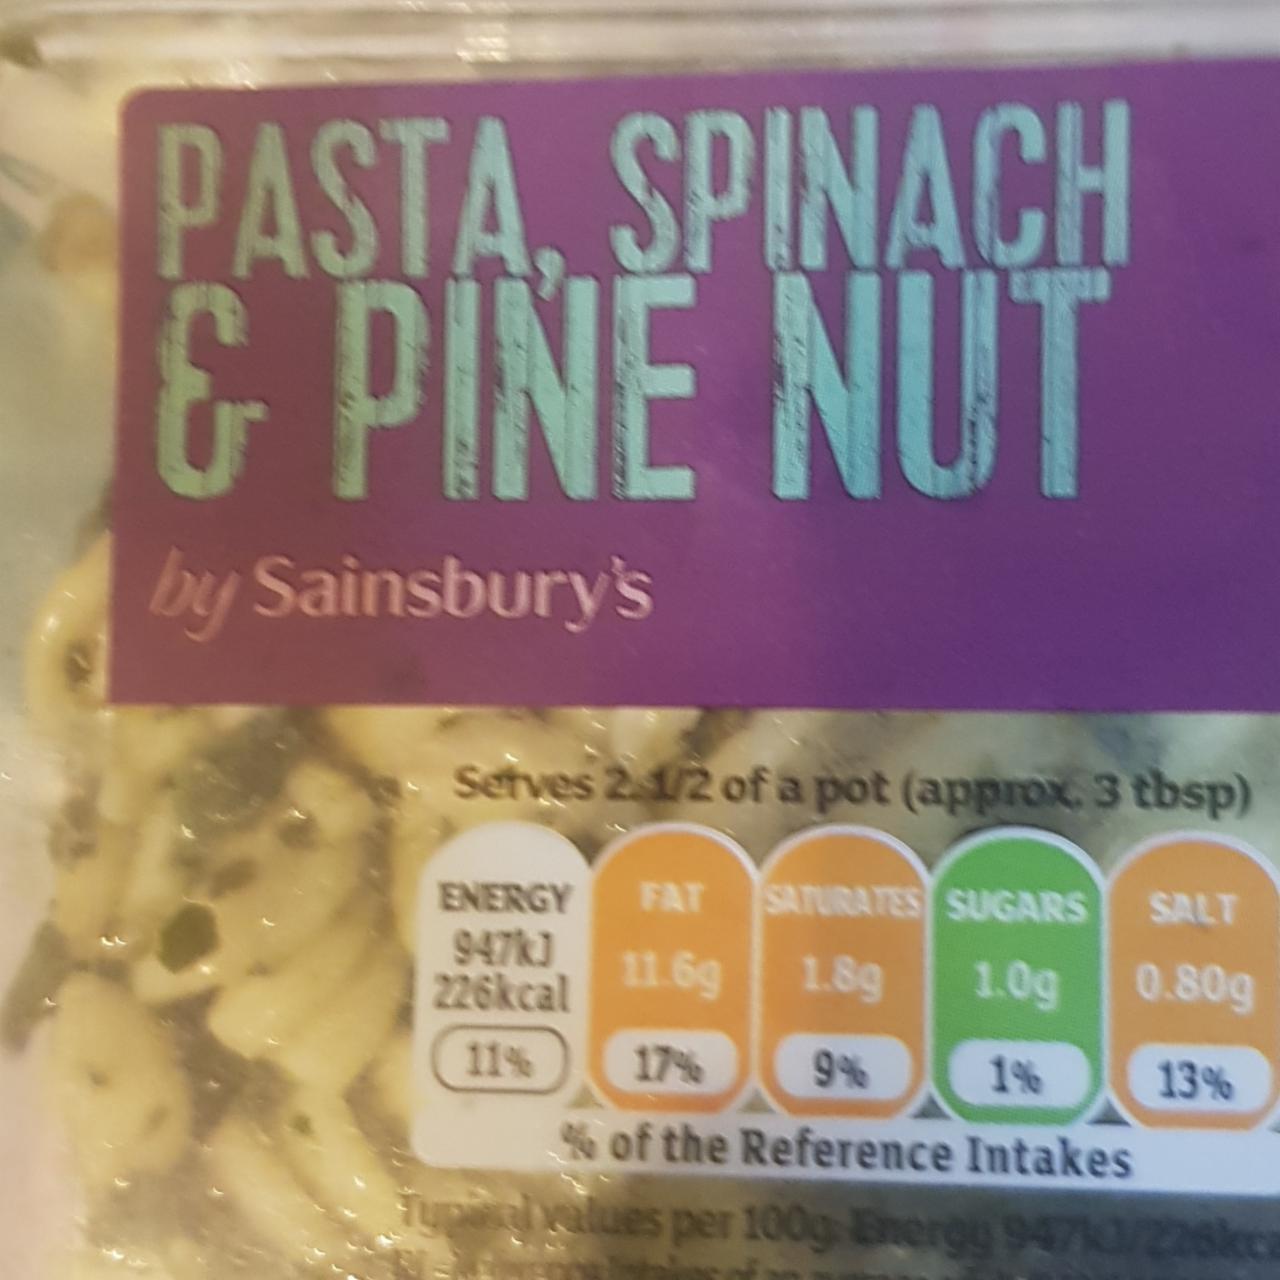 Fotografie - Pasta, Spinach & Pine Nut by Sainsbury's